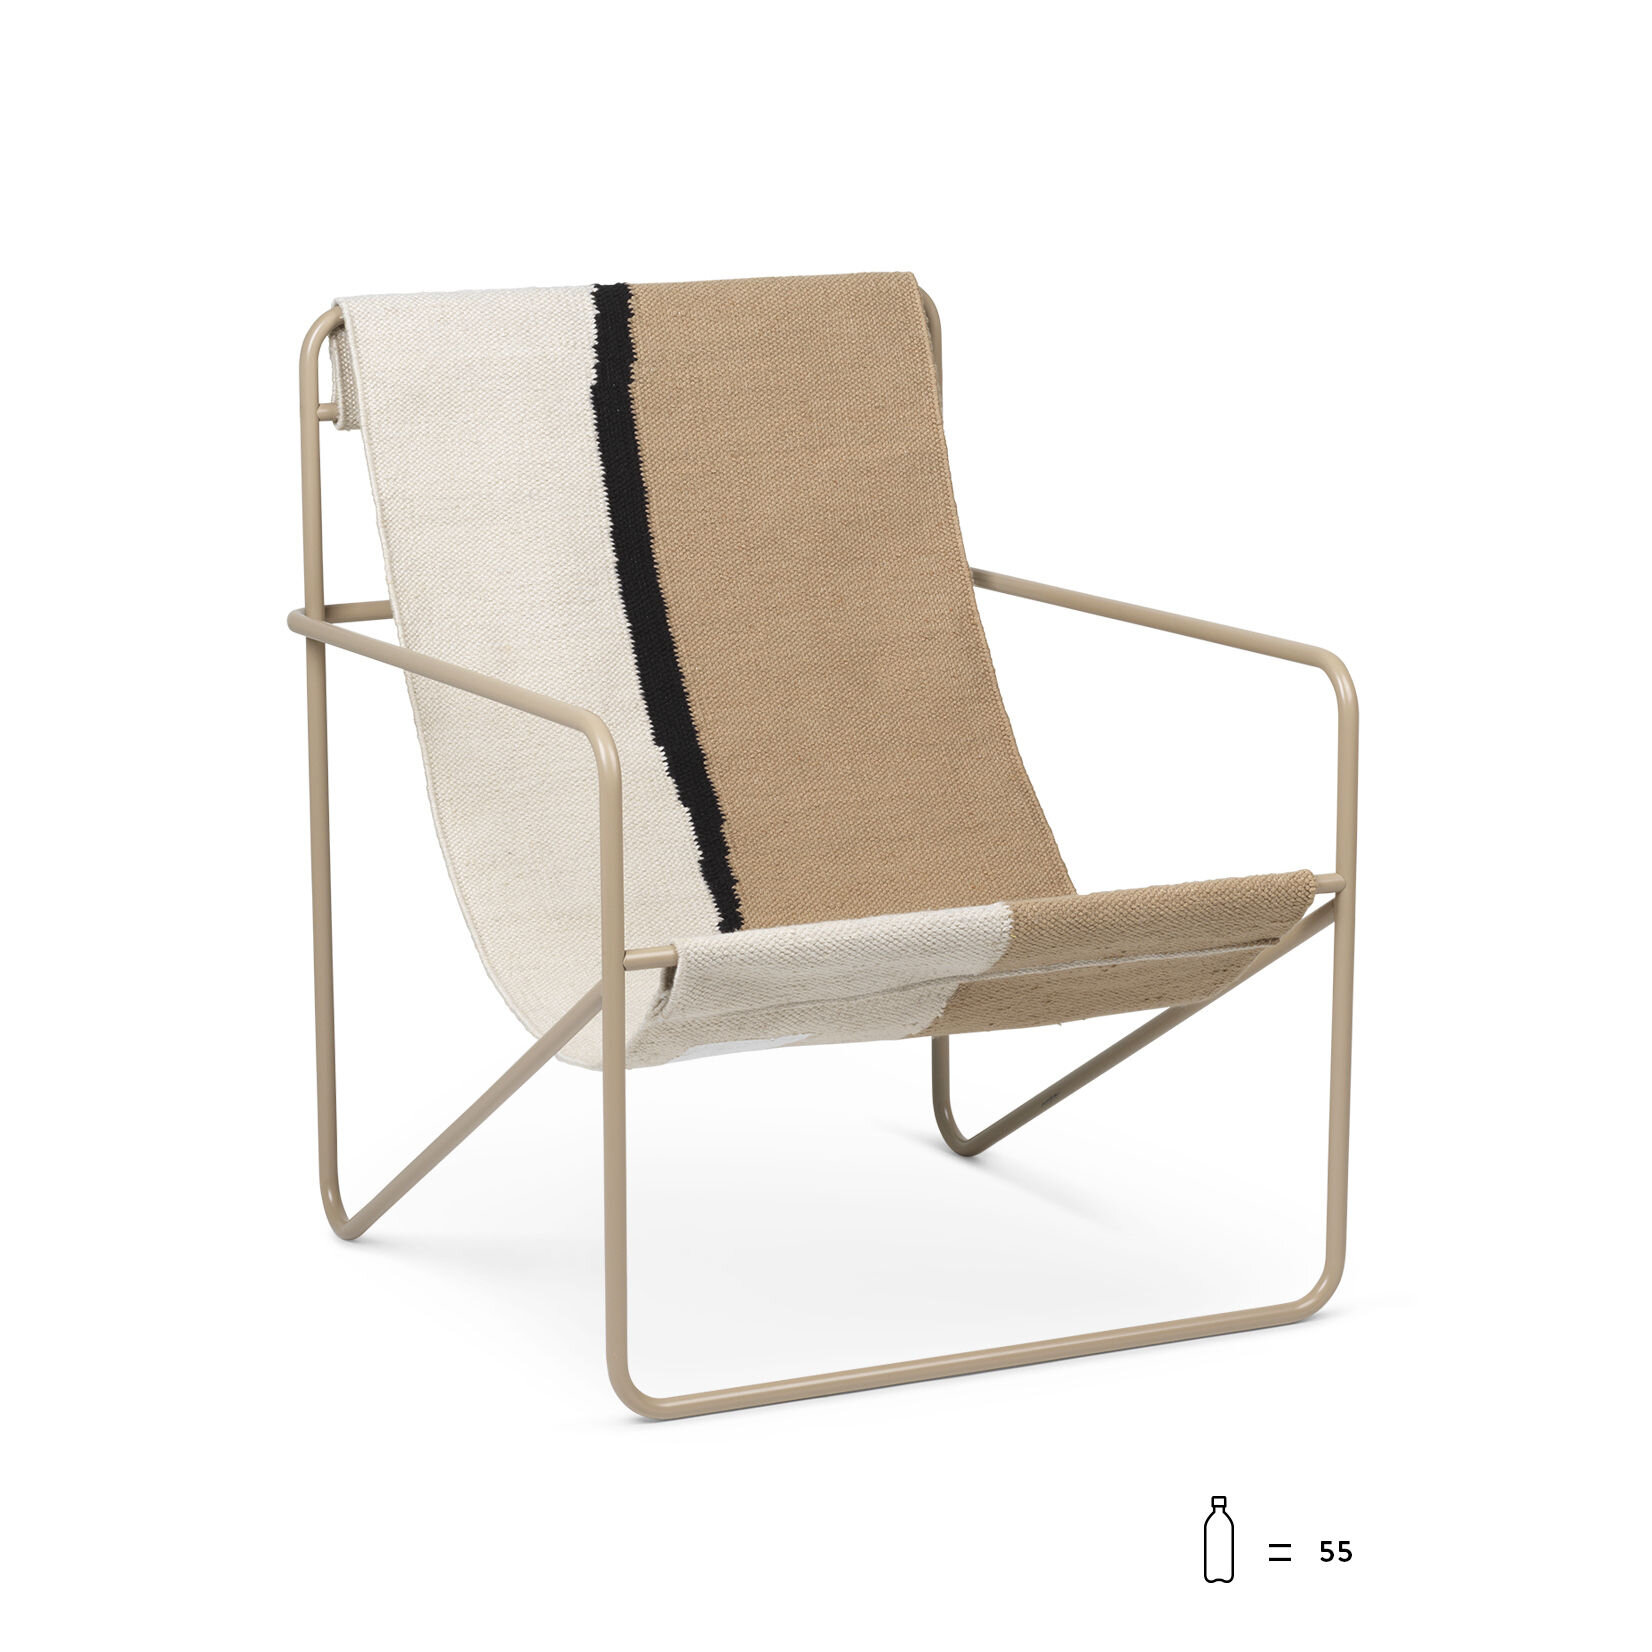 top-mobilier-slow-ethique-fauteuil-desert-metal-beige-toile-soil_madeindesign_340831_original.jpg